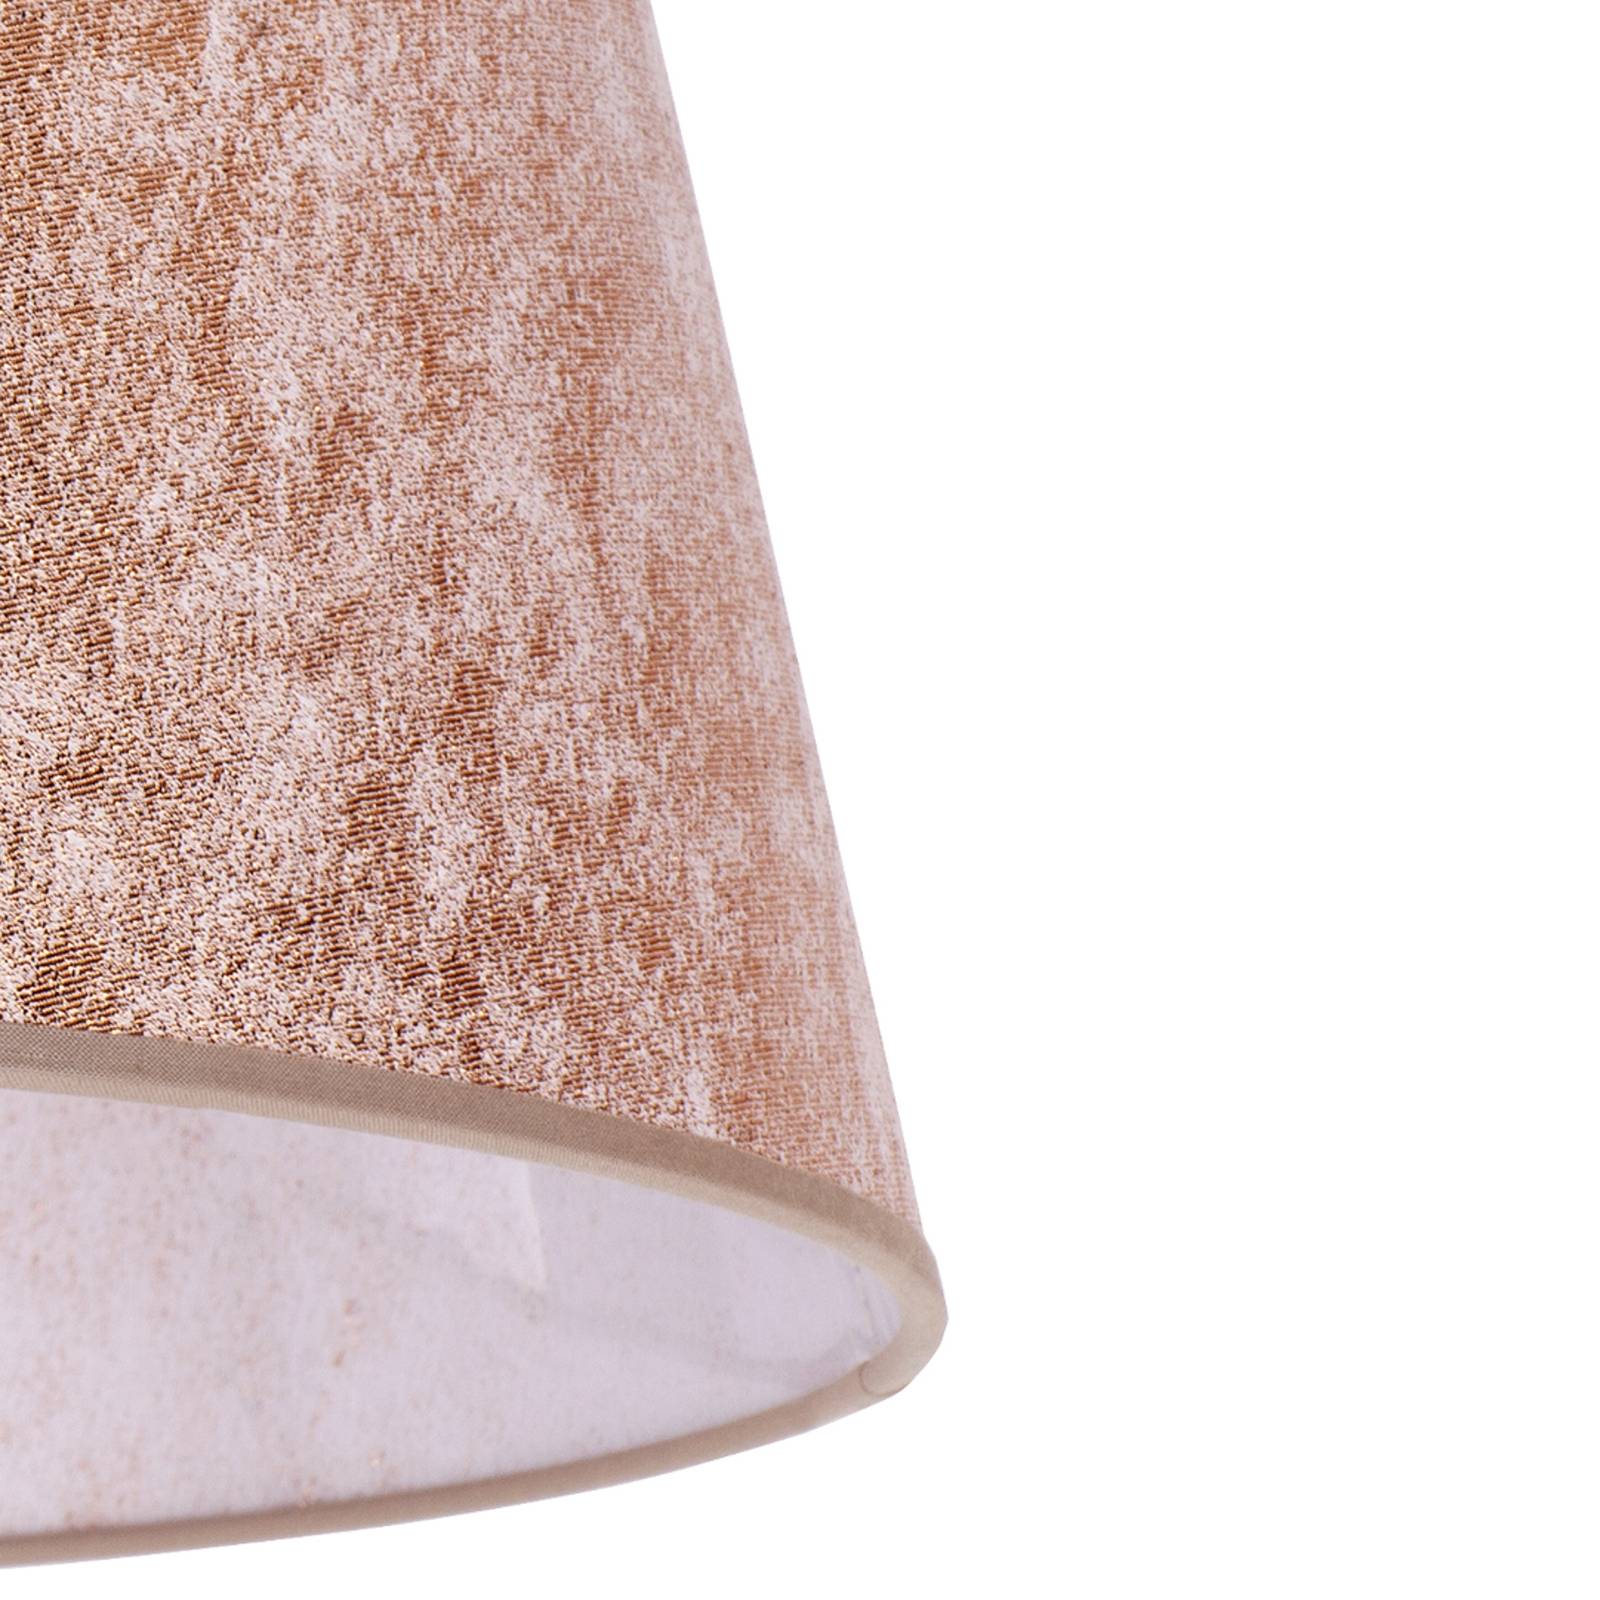 Duolla cone lámpaernyő 25,5 cm magas, réz fémbevon.